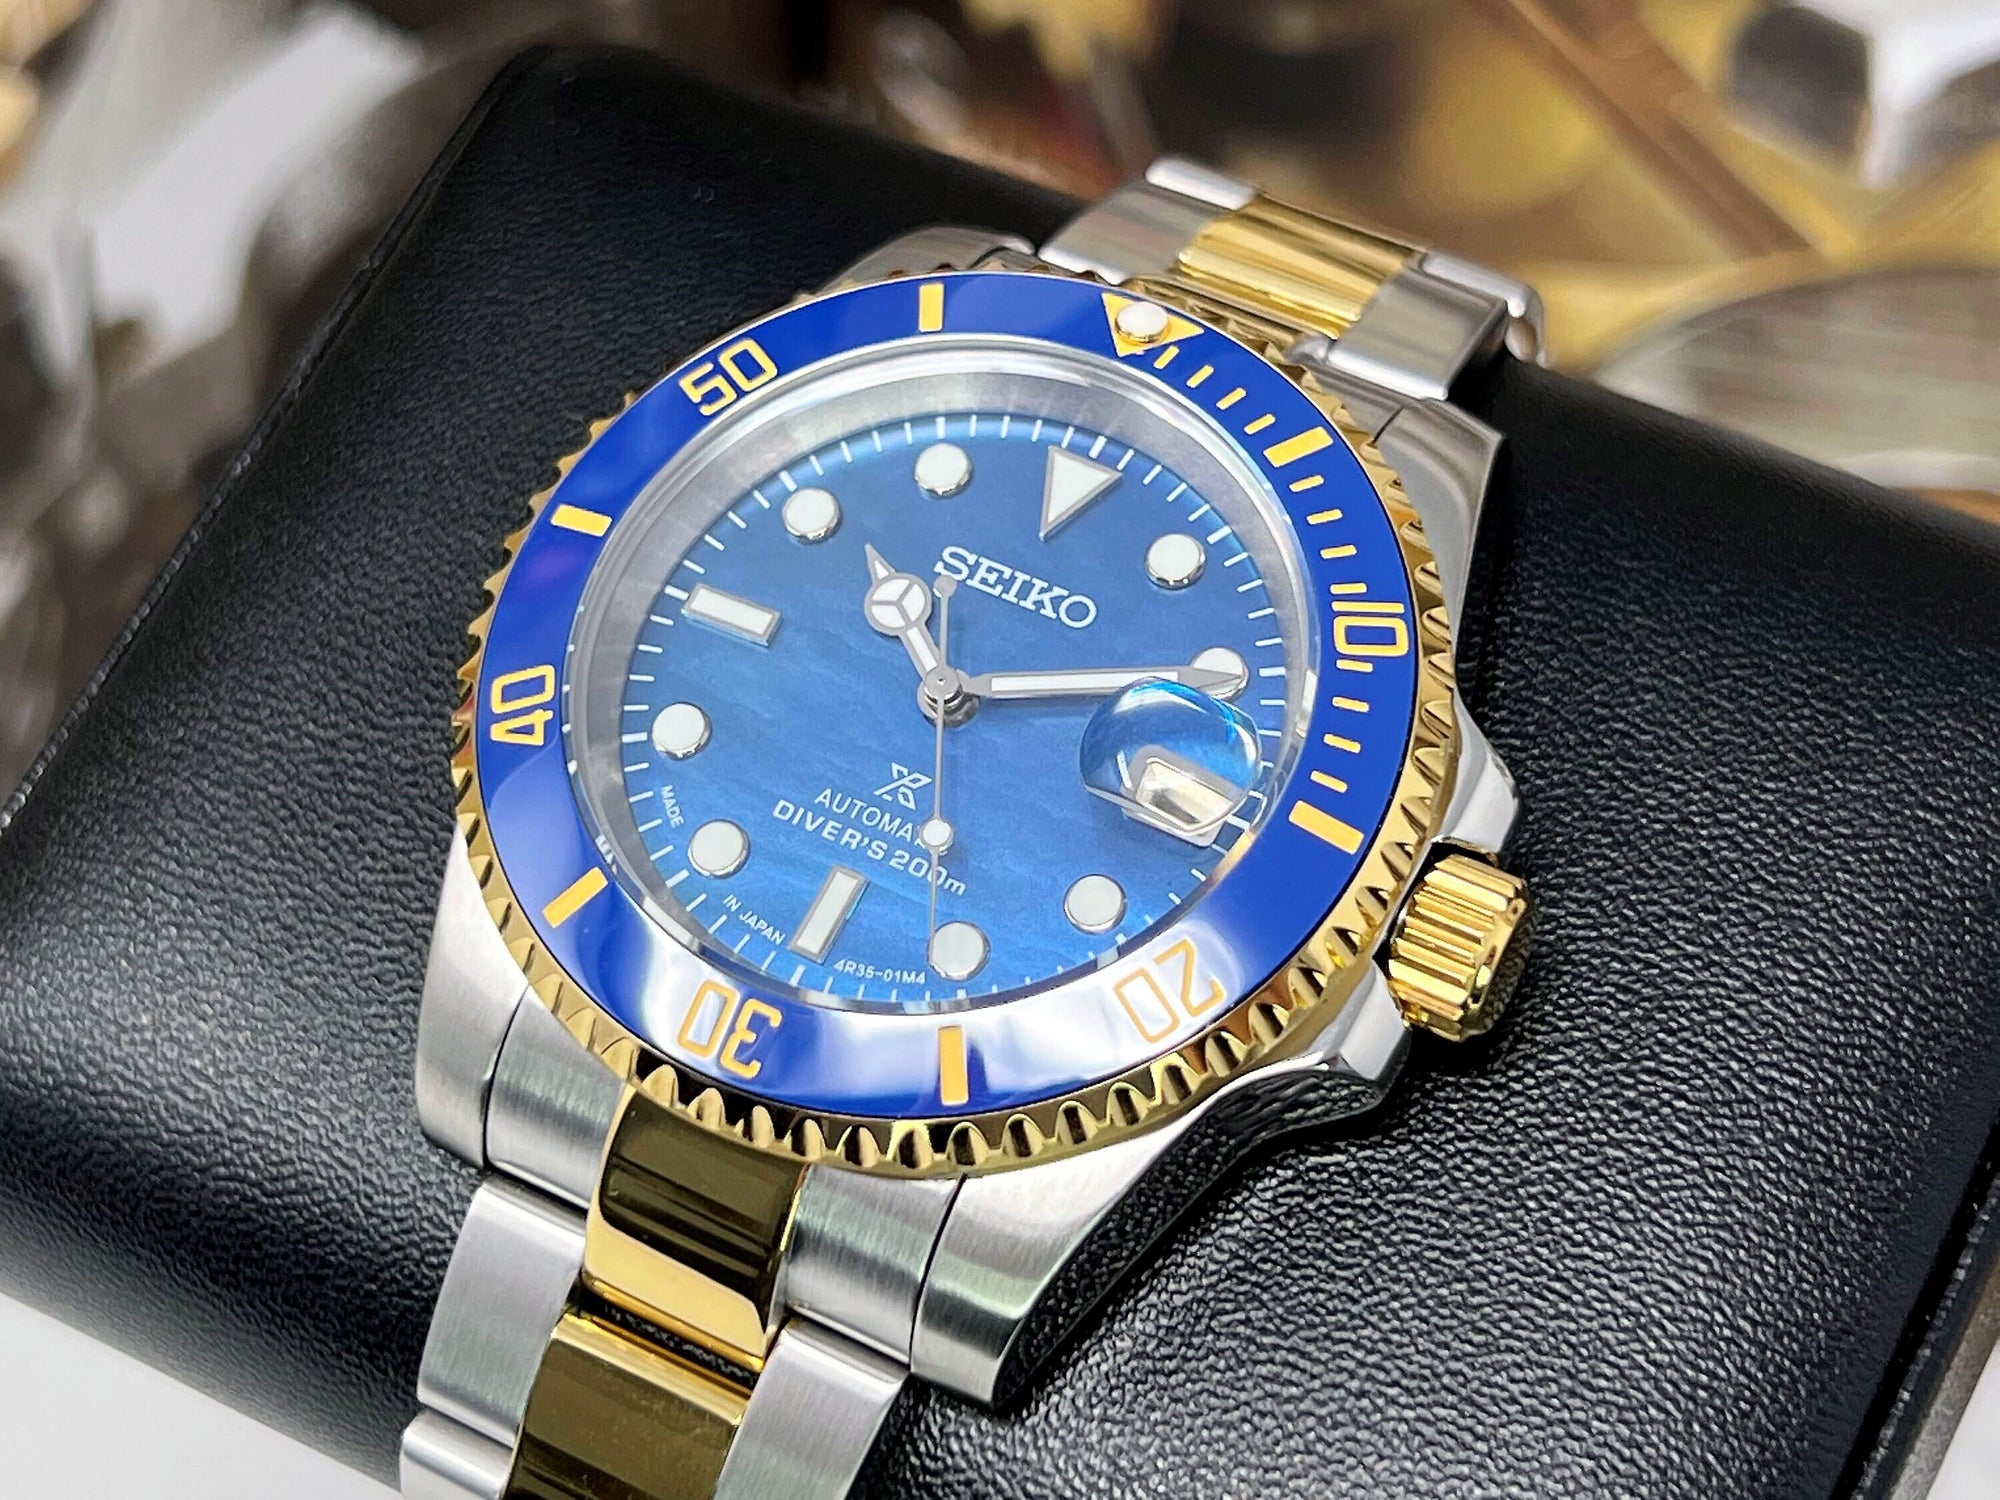 Seiko Submariner Date Two Tone Bluesy Ocean Pearl Dial - Sapphire Crystal - 40mm - Steelsport Ceramic Bezel -Watch Mod | Modded Watch